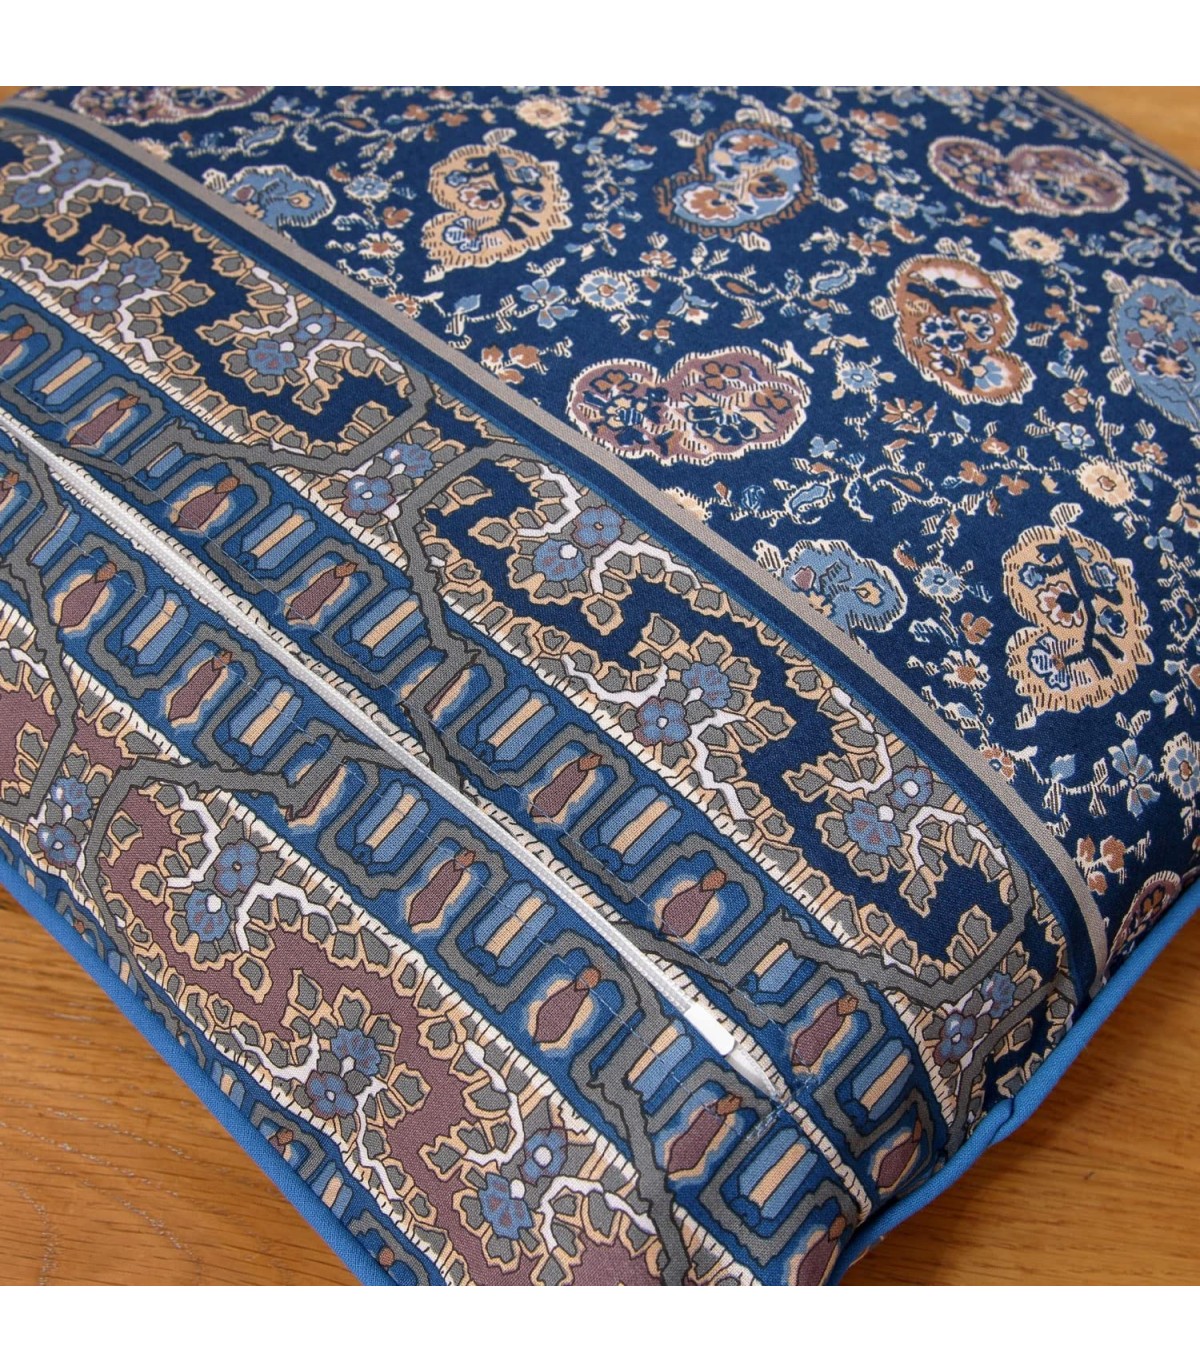 Copricuscino stampa kasbah, collezione Grandfoulard Bassetti